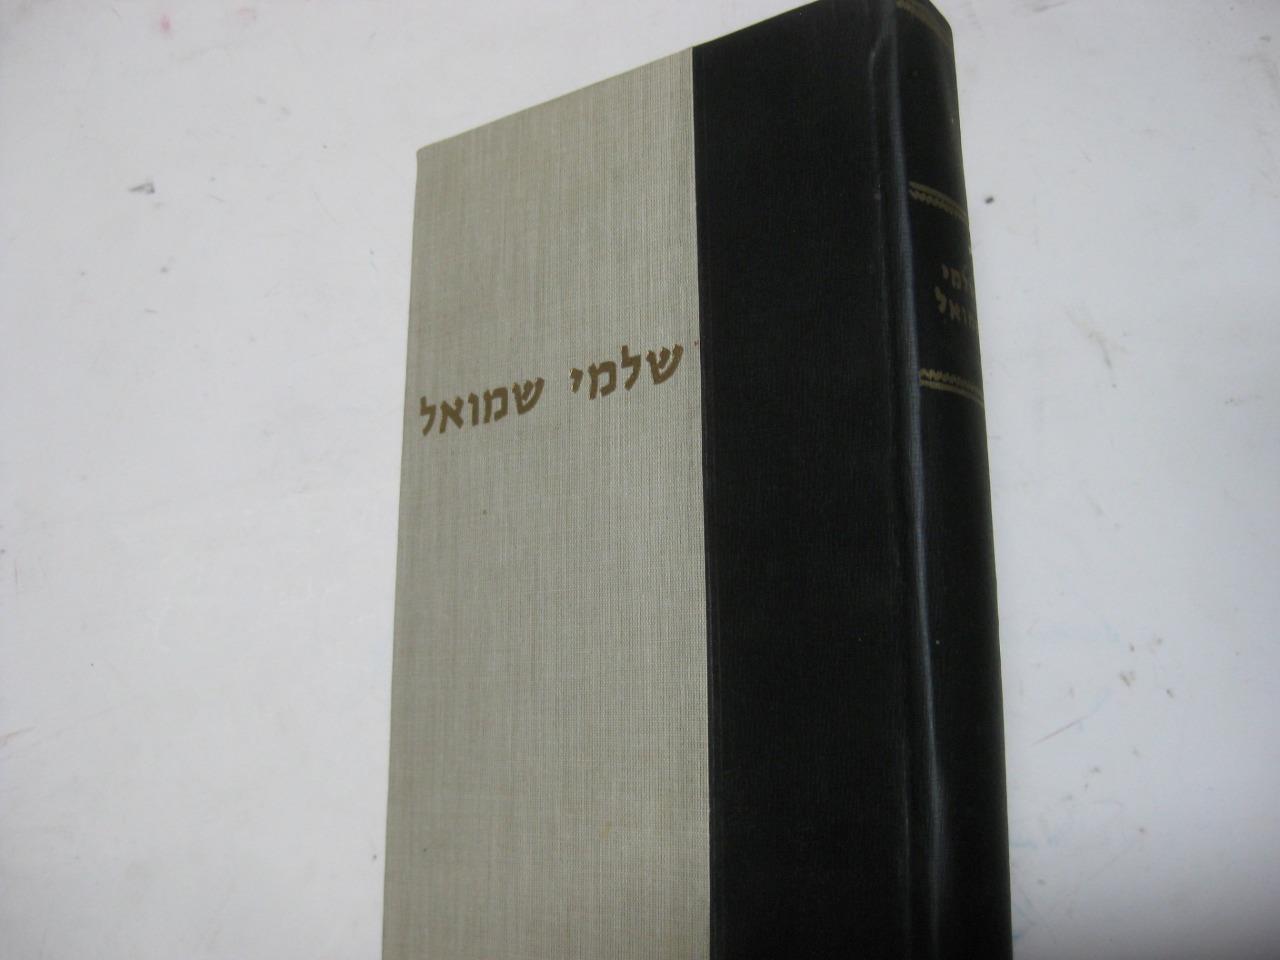 SIGNED Shalme Shmuel by Rabbi Samuel YALOW of SYRACUSE NY RESPONSA & CHIDDUSHIM